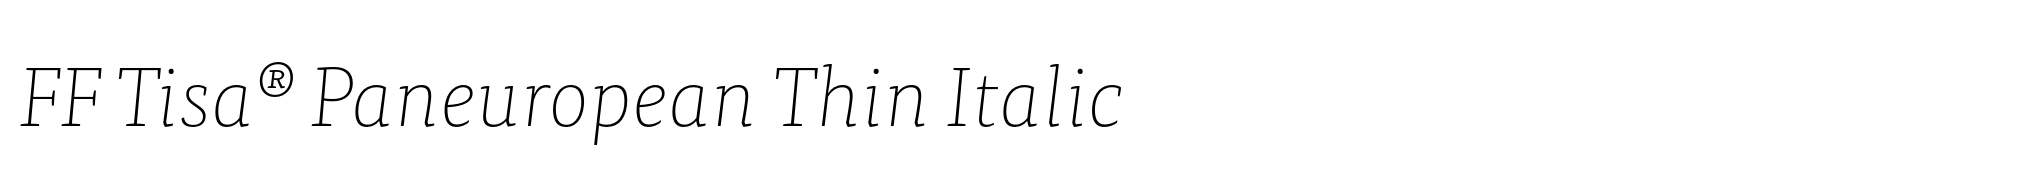 FF Tisa® Paneuropean Thin Italic image